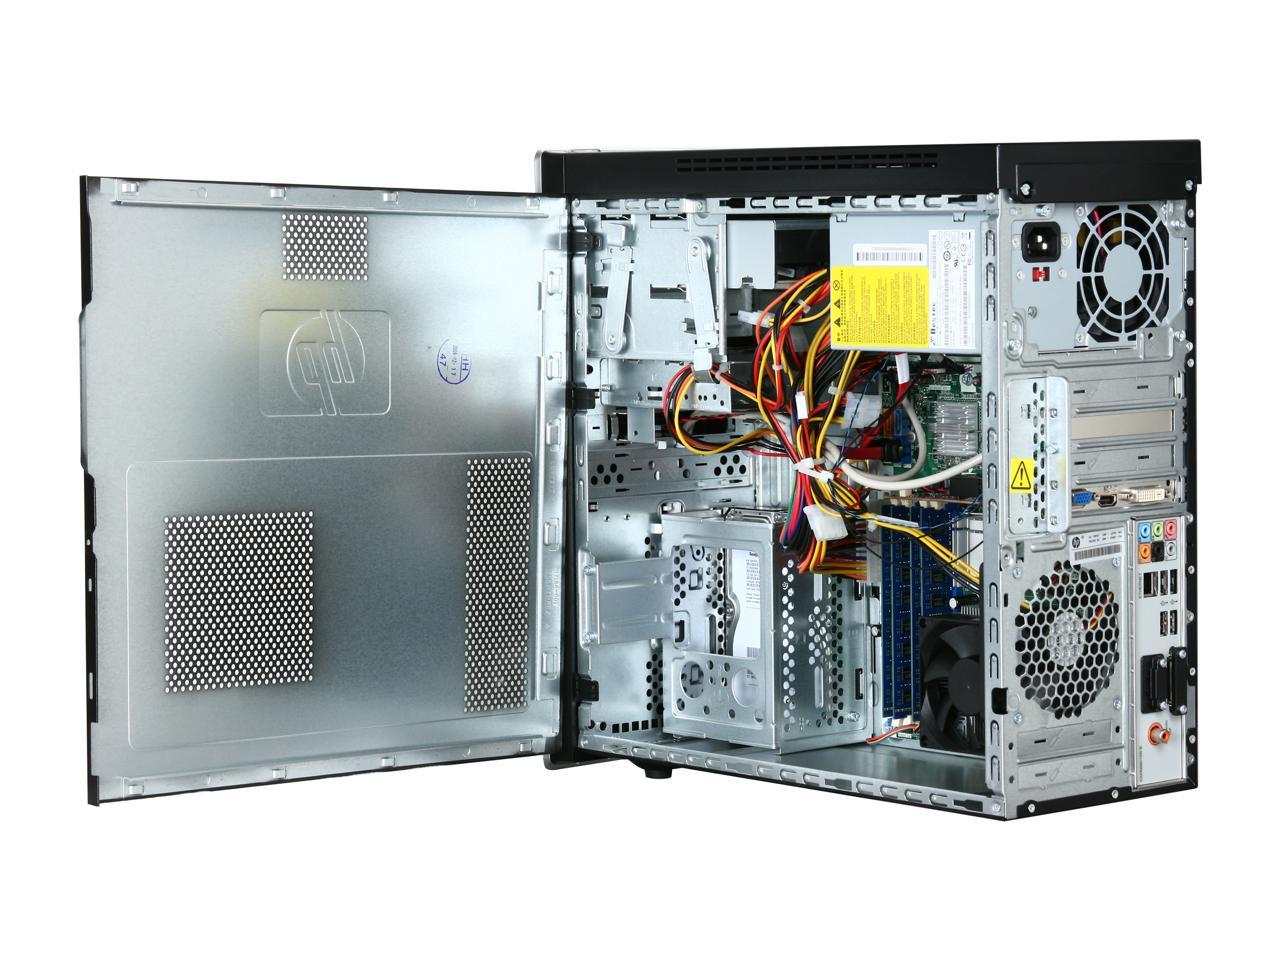 New PC Power Supply Upgrade for HP Pavilion Elite HPE-137c  Desktop Computer 